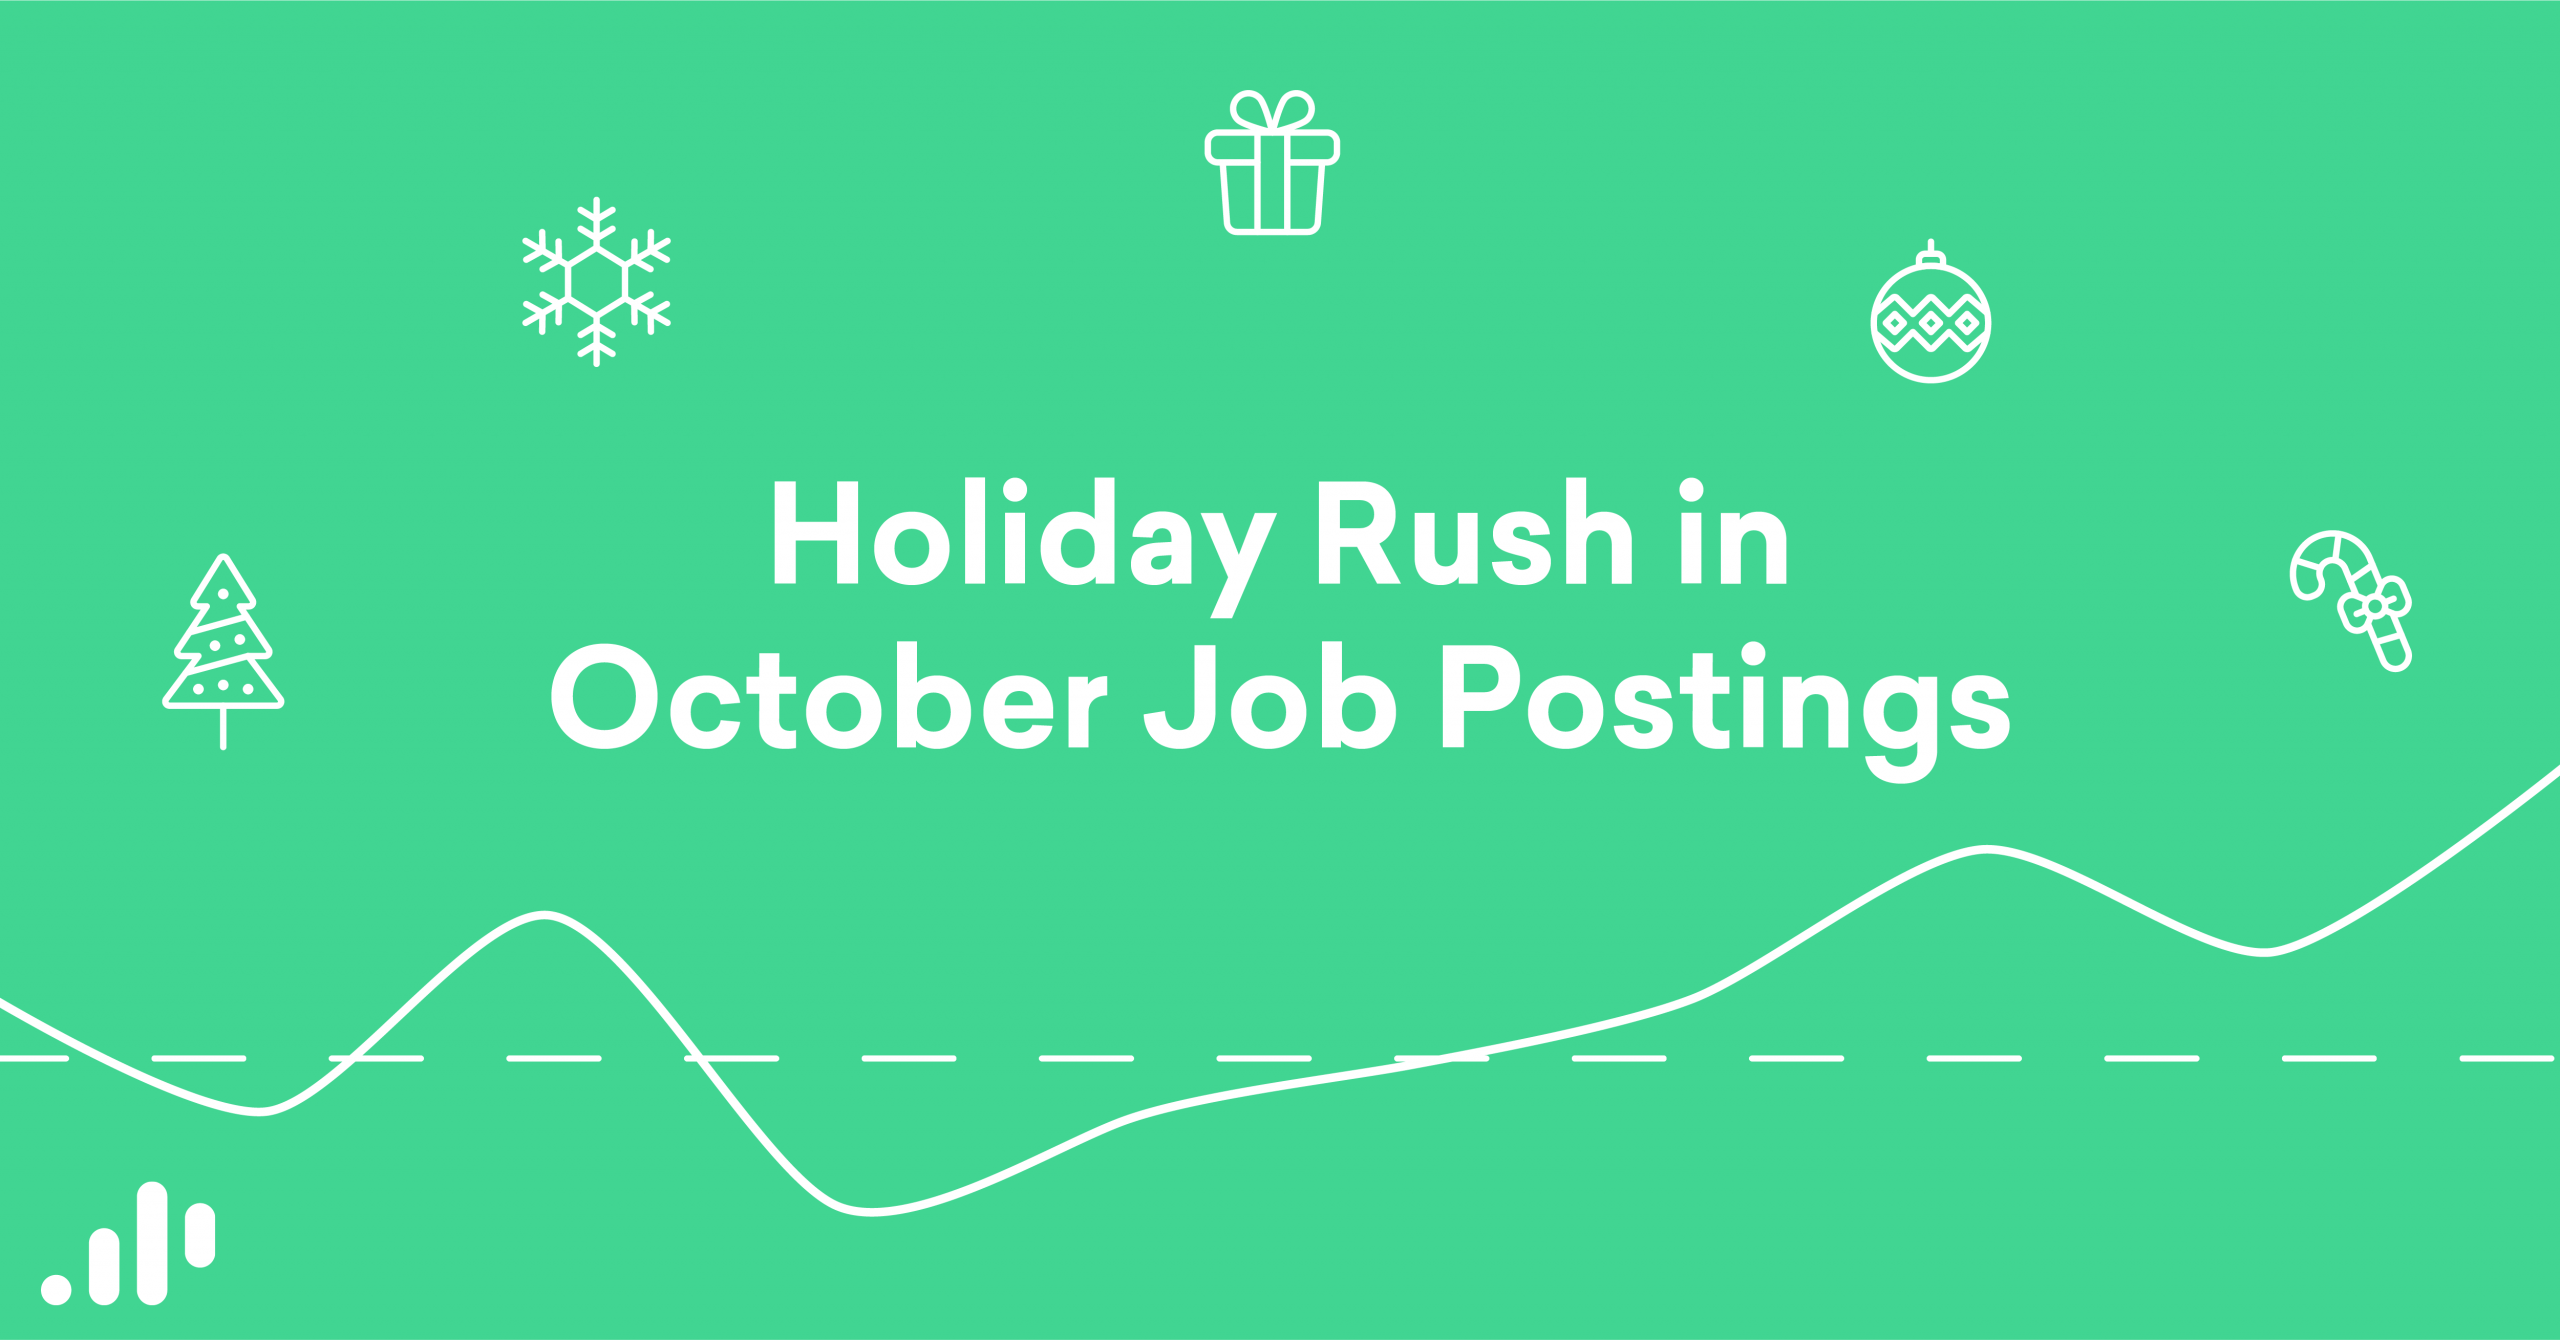 Holiday Rush in October Job Postings